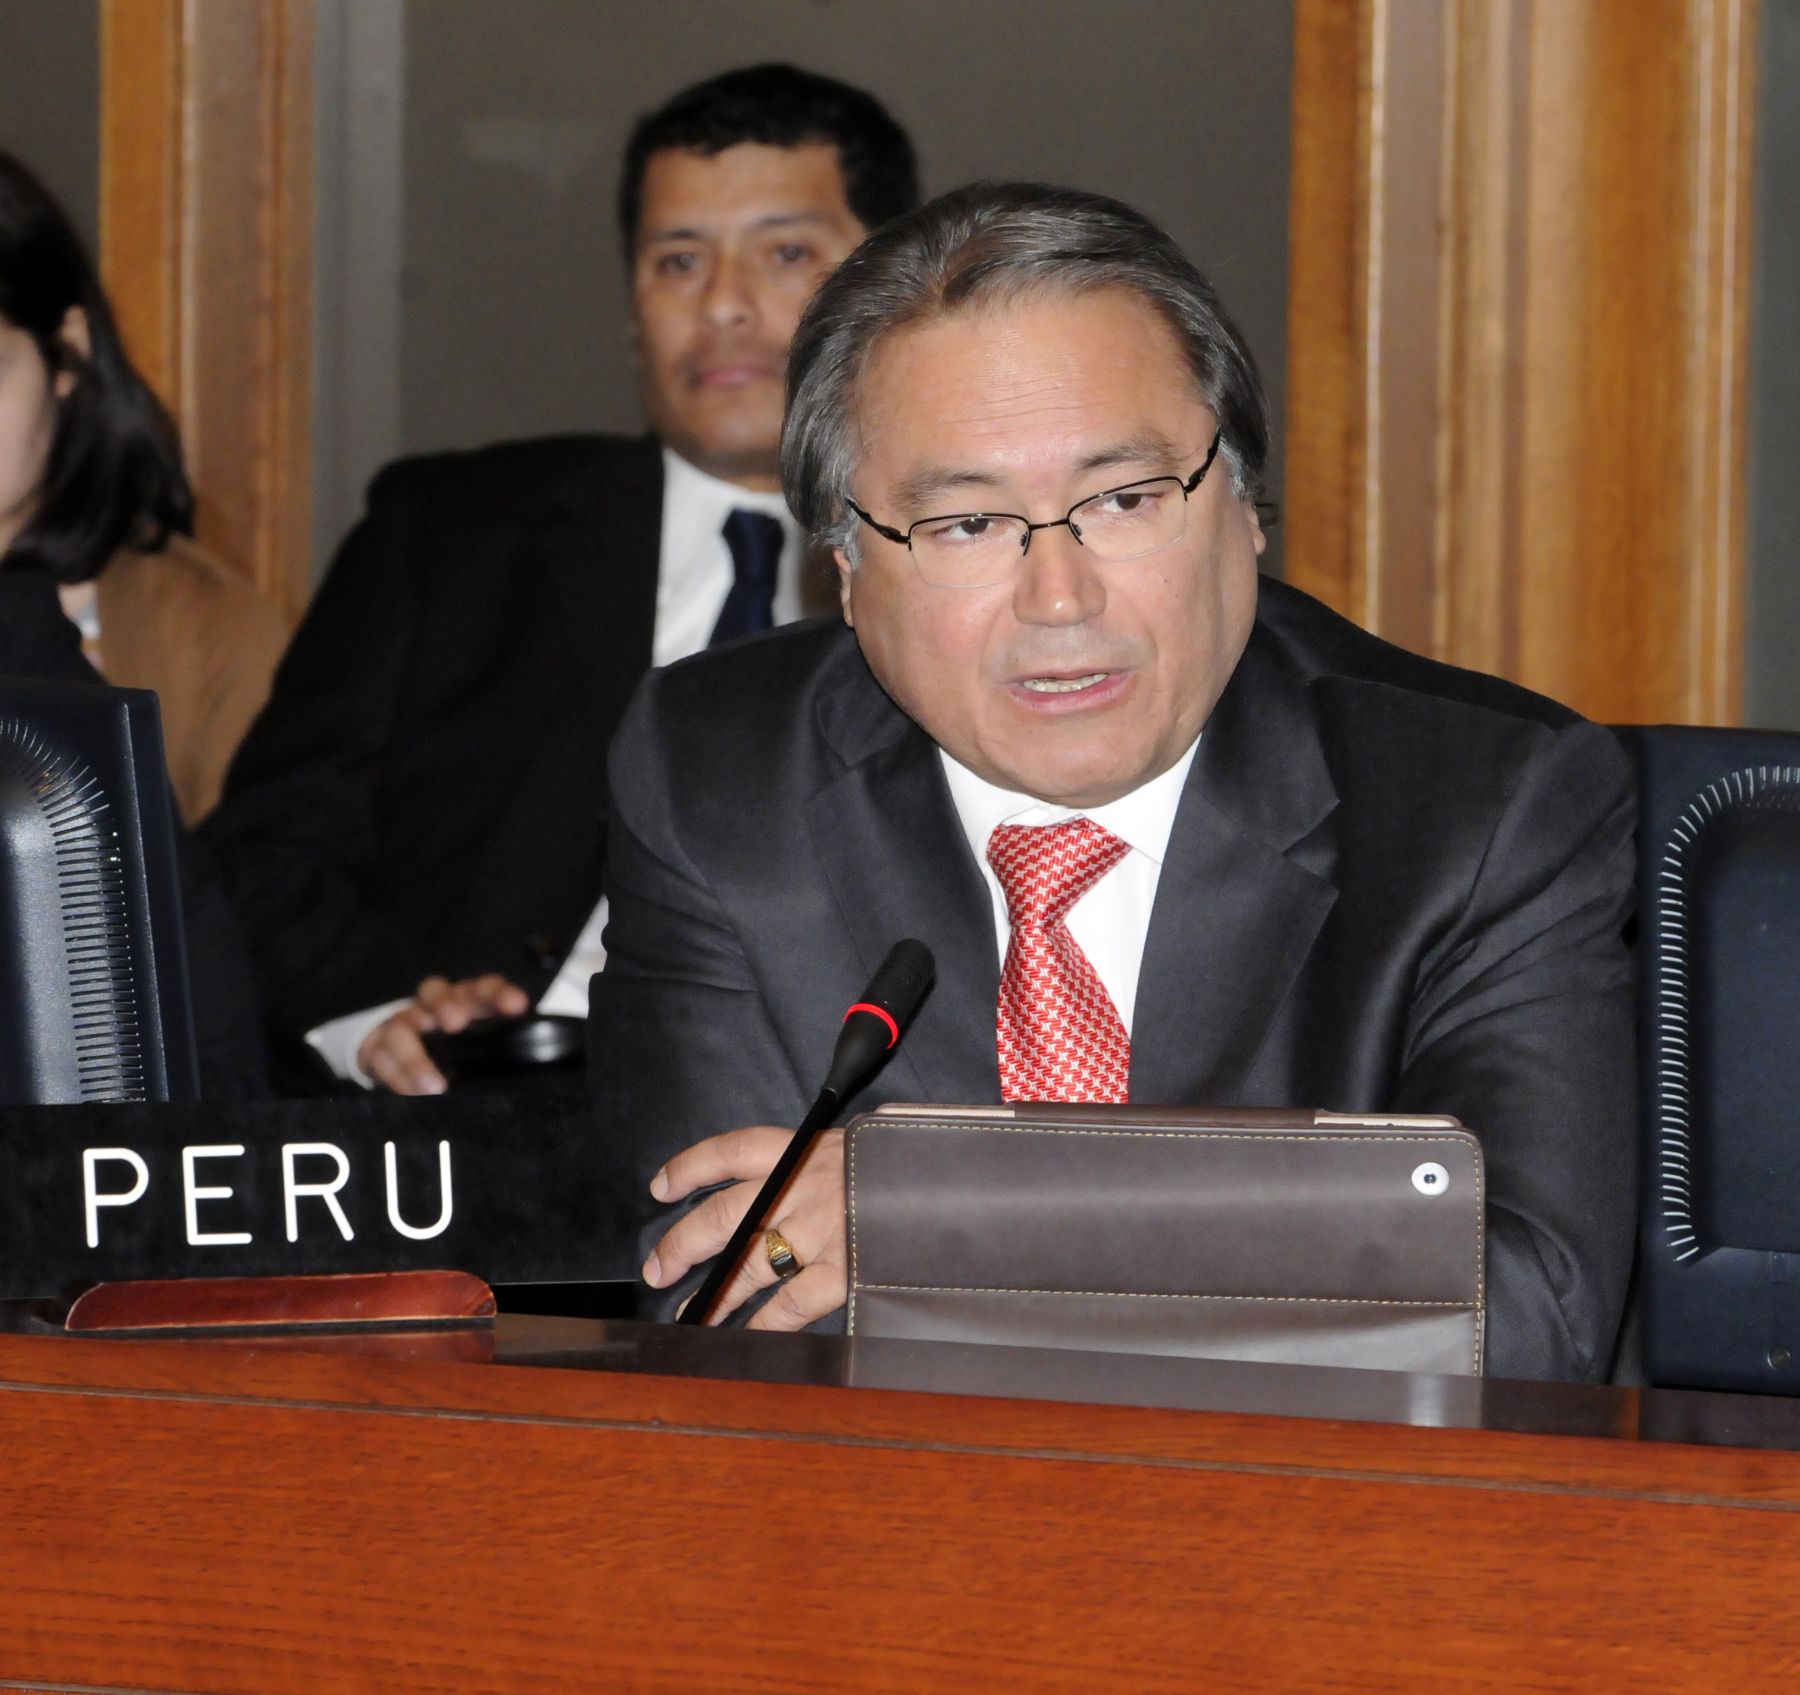 Walter Albán, Former Chairmar of the OAS Permanent Council and Permanent Representative of Peru. Photo: OEA